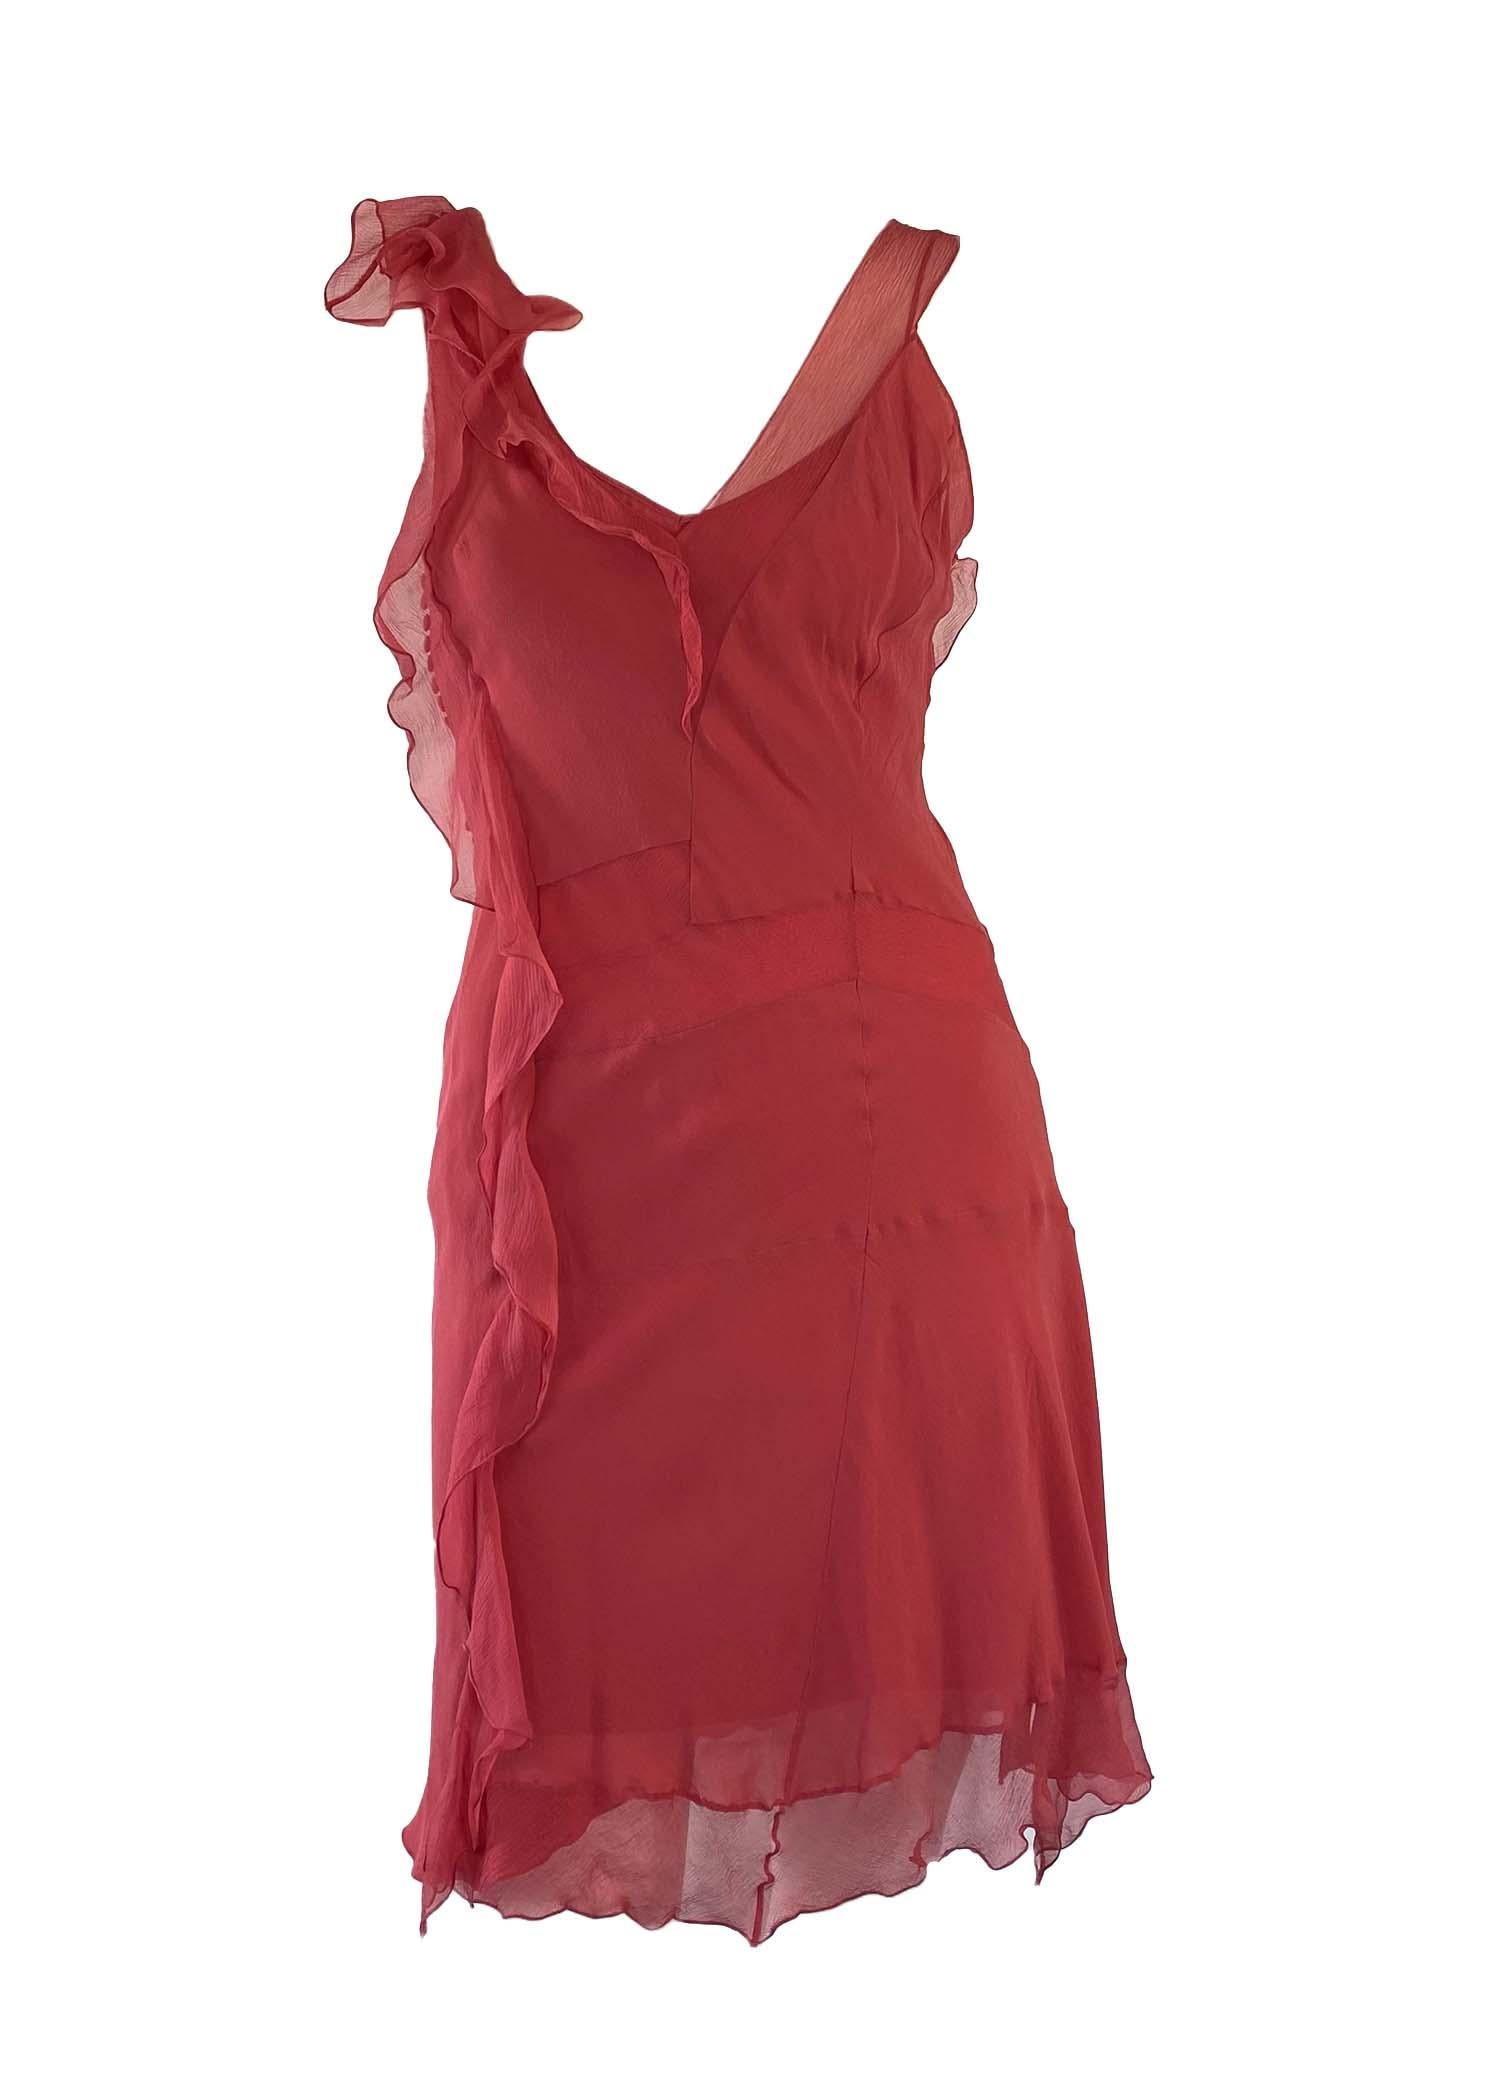 Resort 2007 Christian Dior by John Galliano Pink Silk Chiffon Ruffle Dress Slip 1